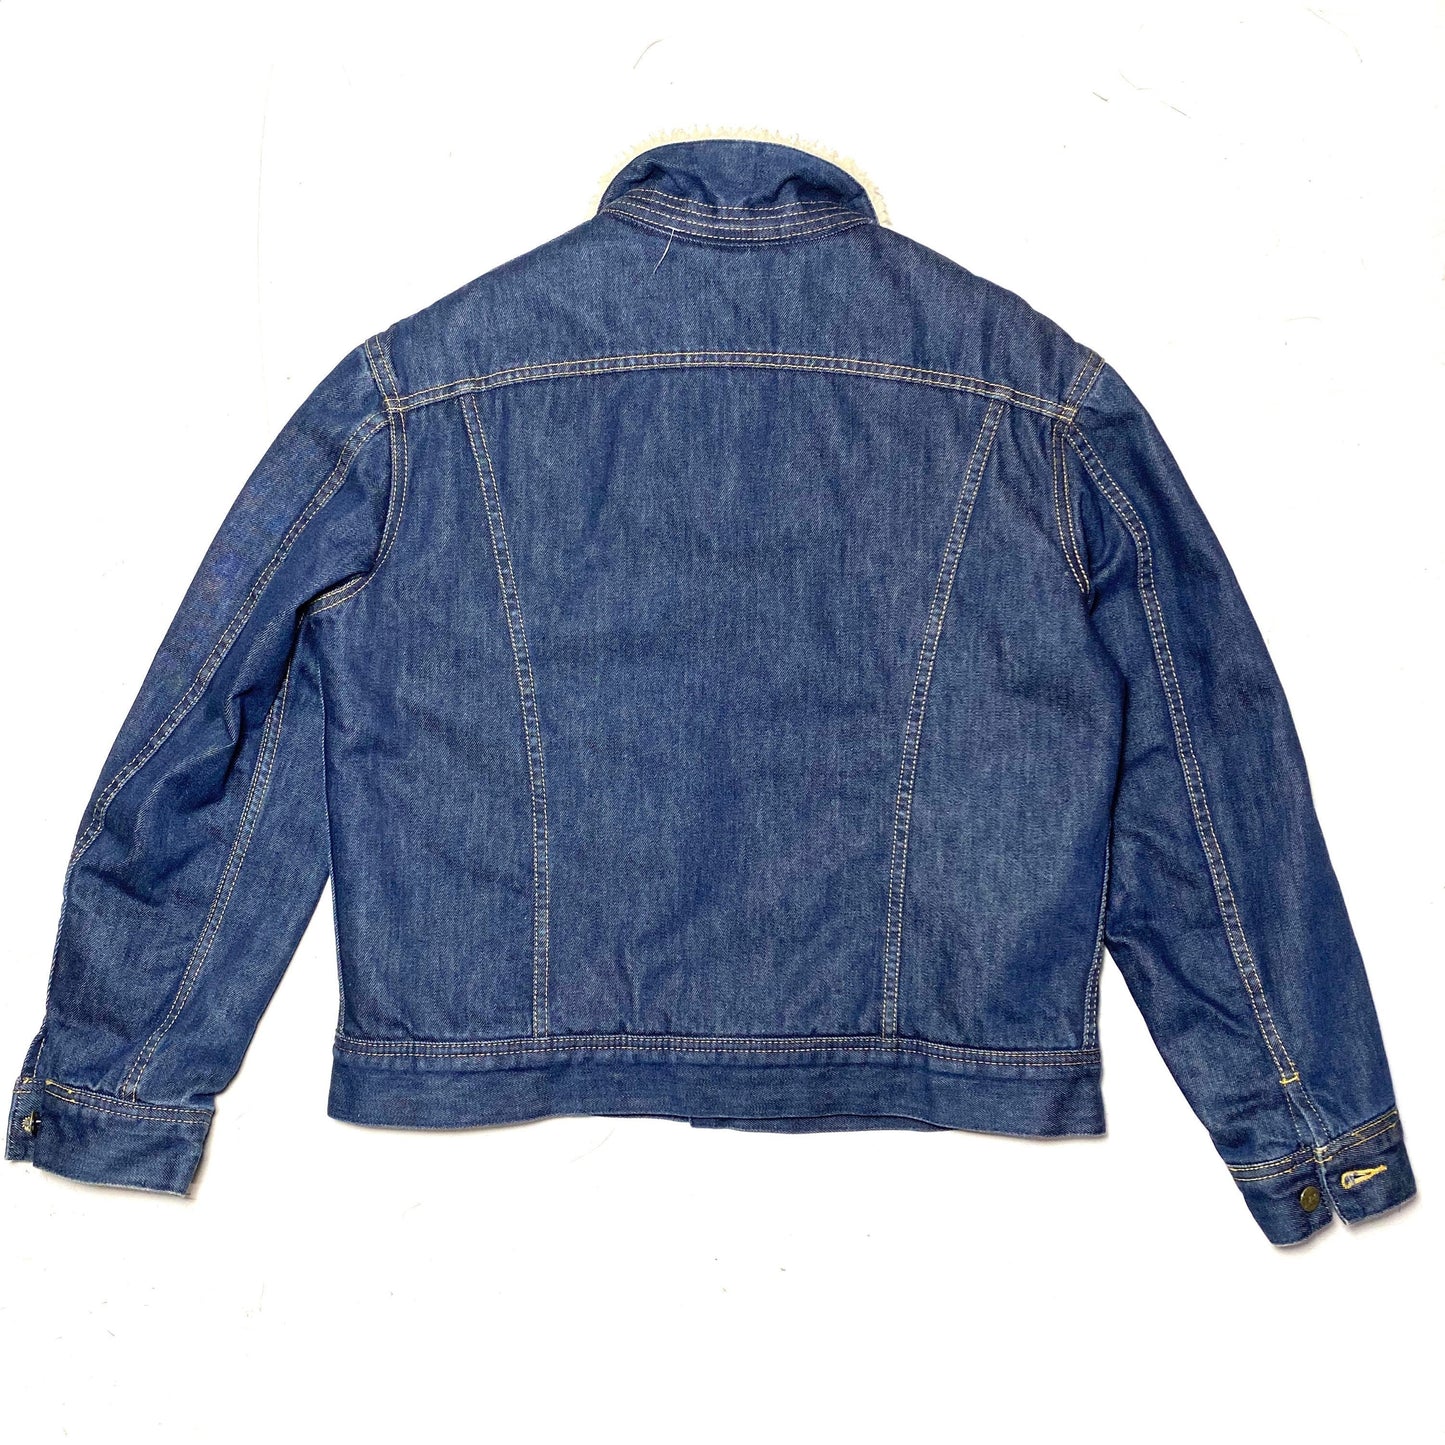 Lee Jeans denim Sherpa winter trucker jacket for ladies sz XL, mint condition